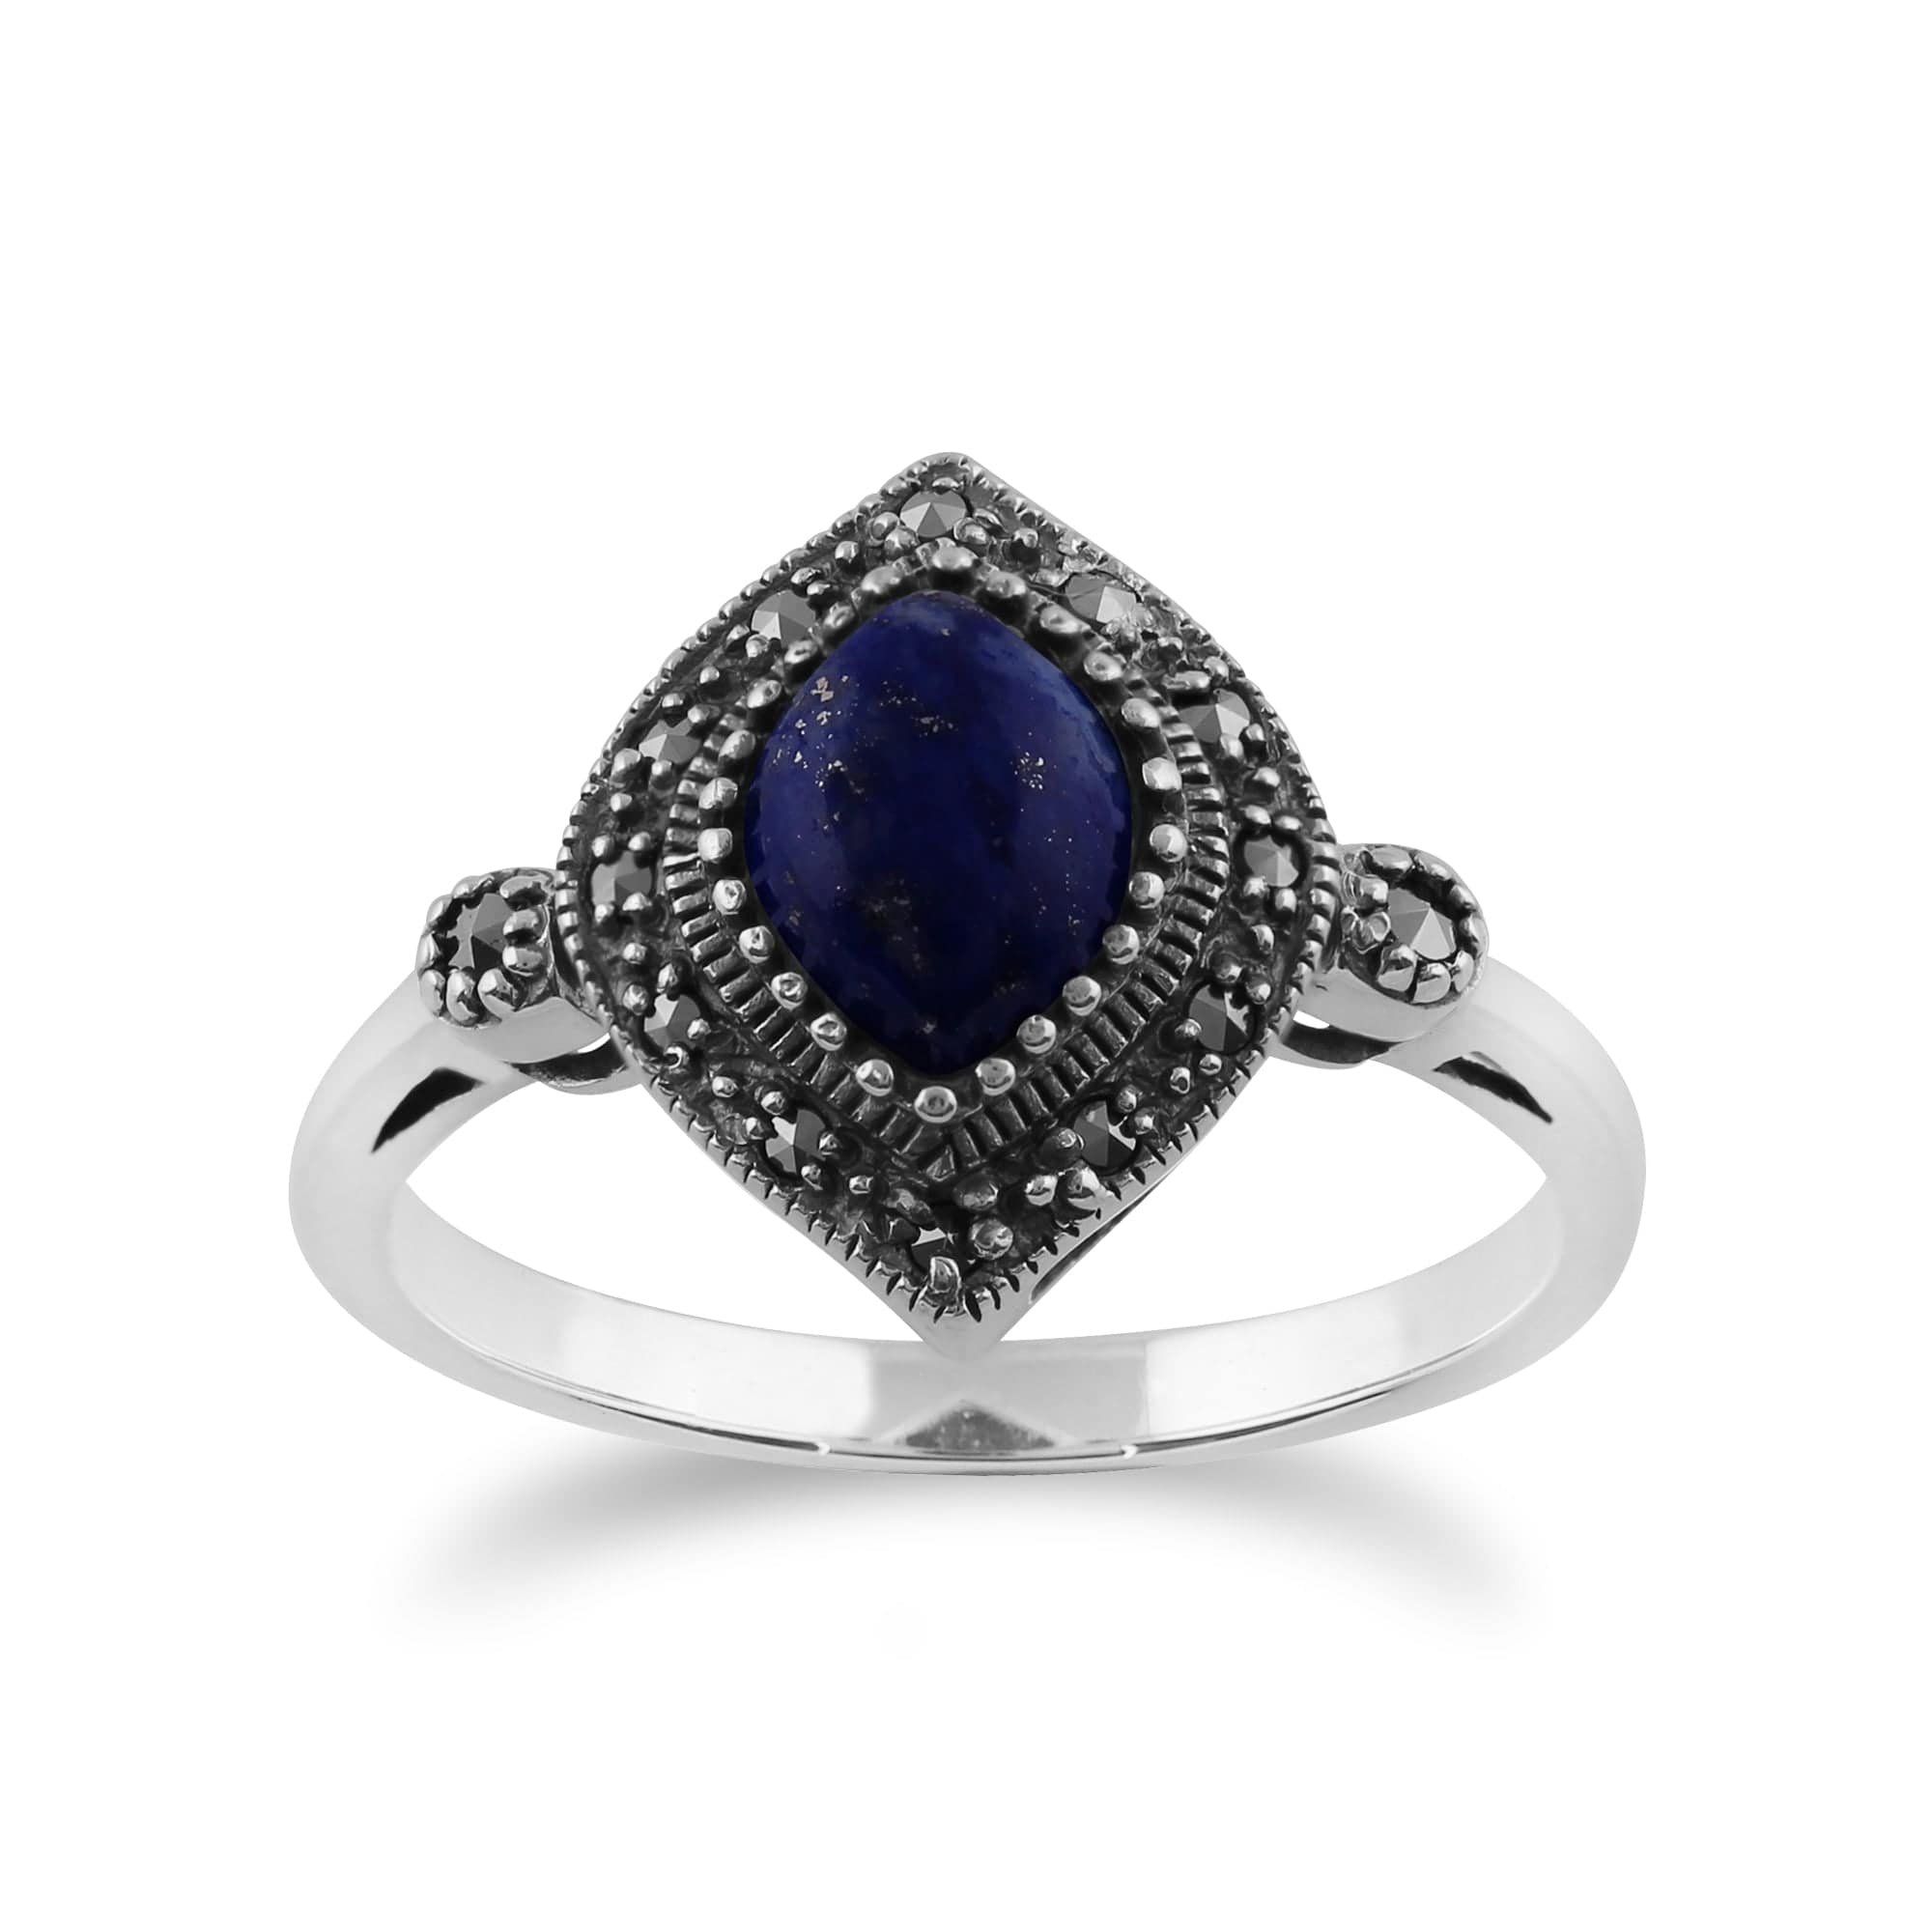 Gemondo 925 Sterling Silver 1.00ct Lapis Lazuli & Marcasite Art Deco Ring Image 1